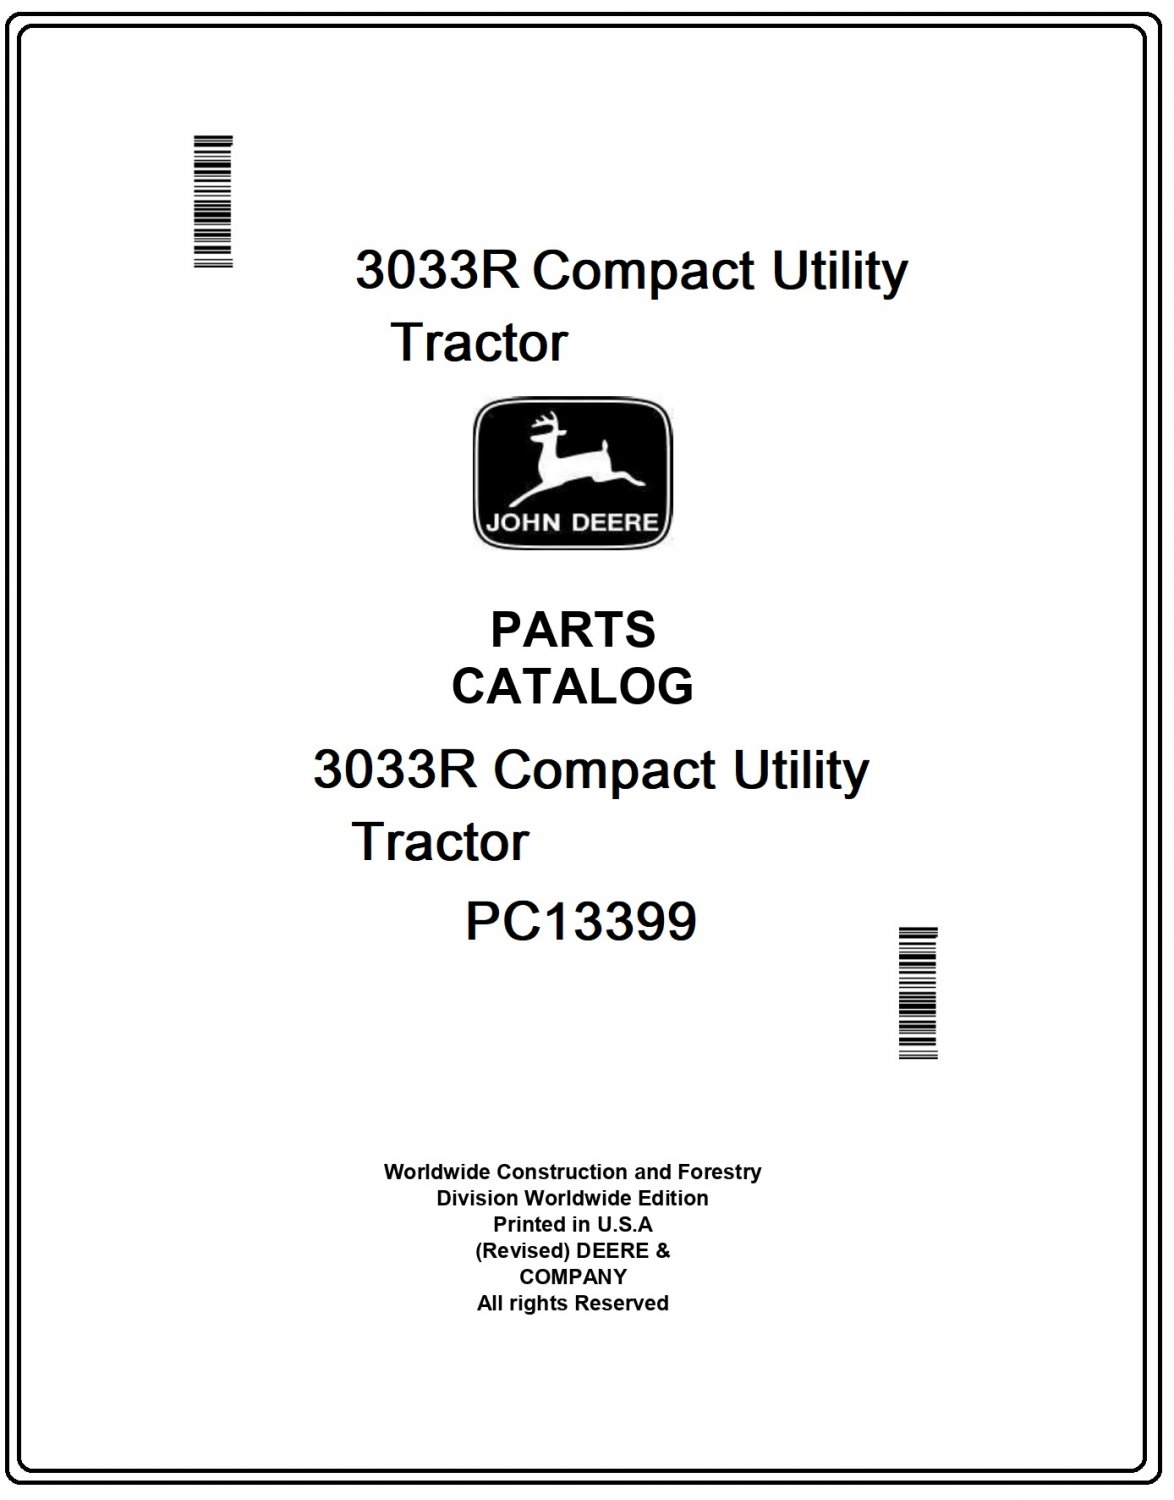 John Deere 3033R Compact Utility Tractor Parts Catalog Manual Download Pdf-PC13399